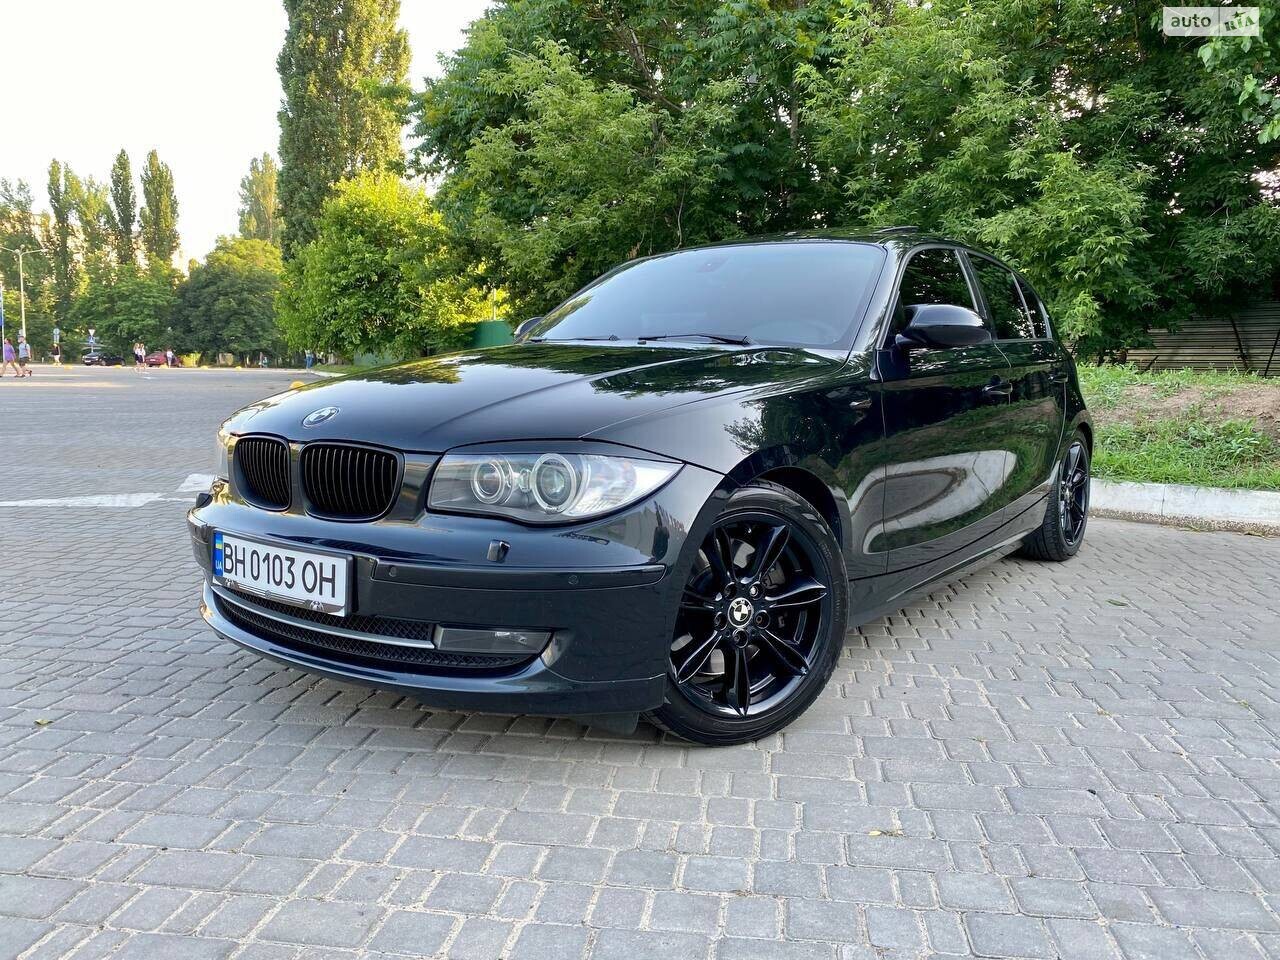 BMW 1 Series '123d'